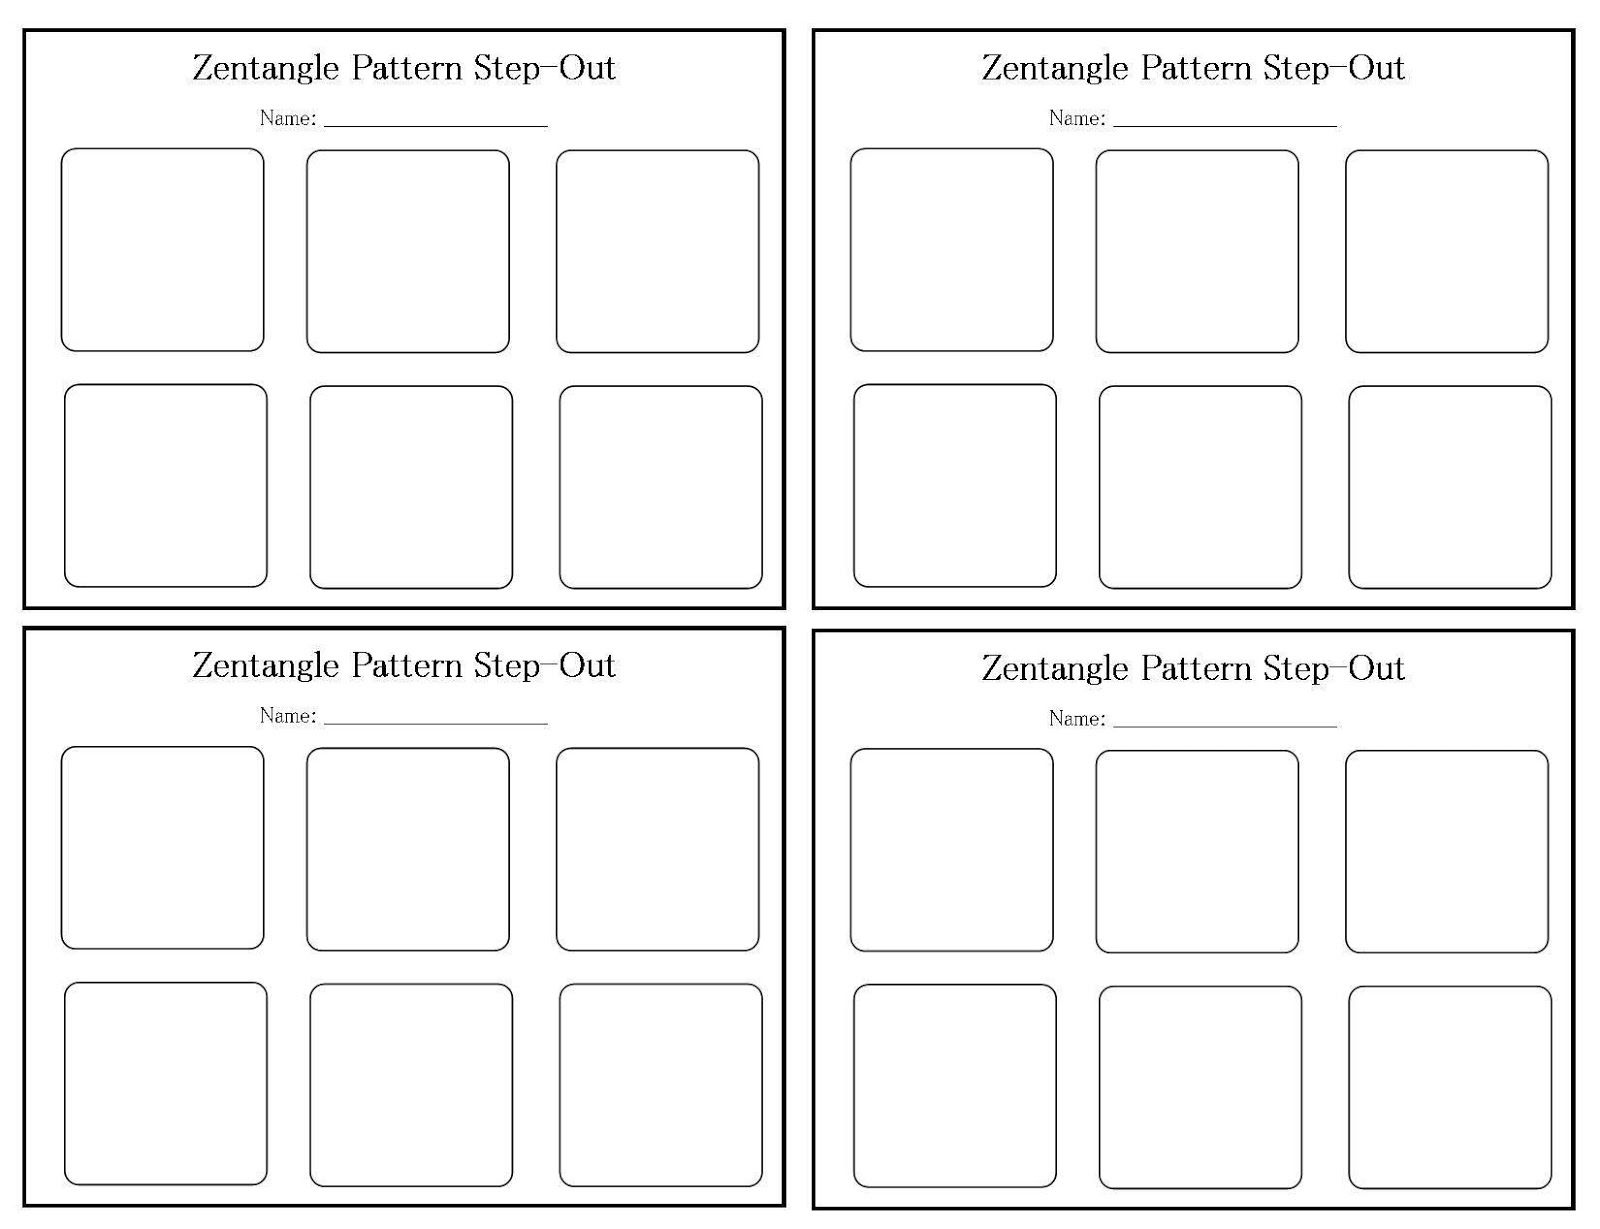 Midnight Pixy Designs Resources Zentangle Patterns Pattern Block